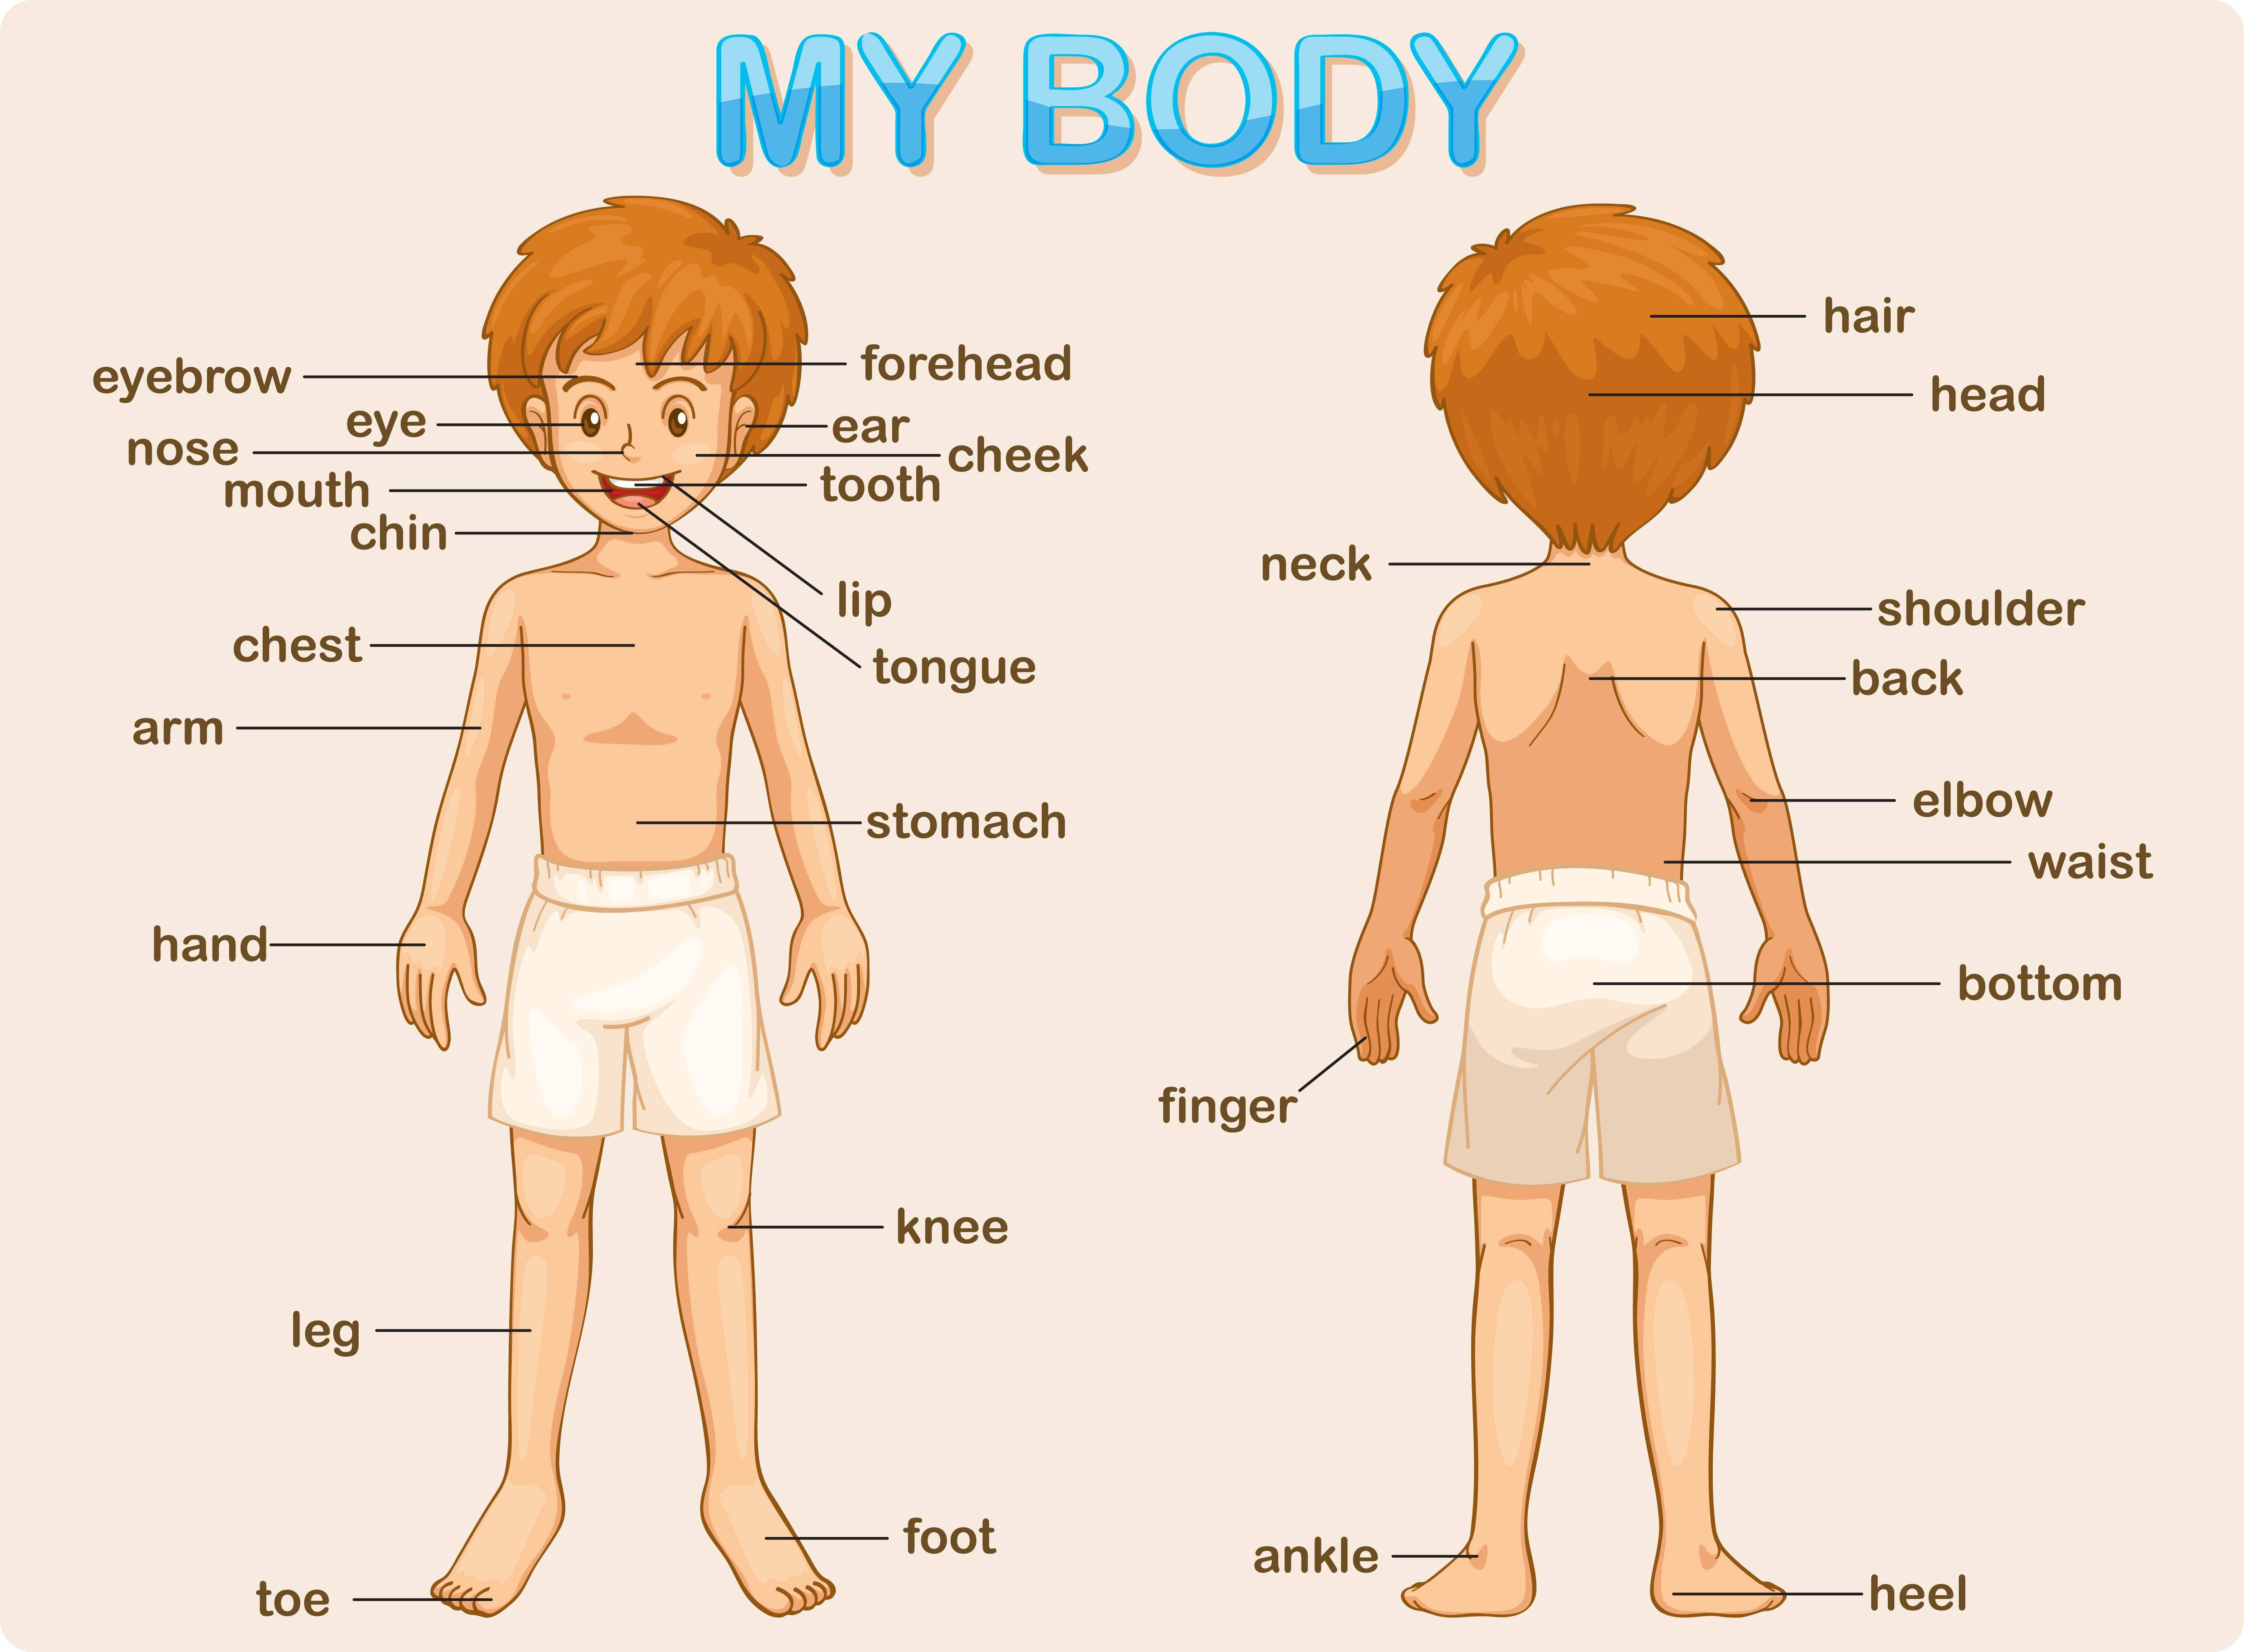 Can use the body. Части тела человека. Части тела на английском. Тело человека на английском языке. Части тела на английском языке для детей.